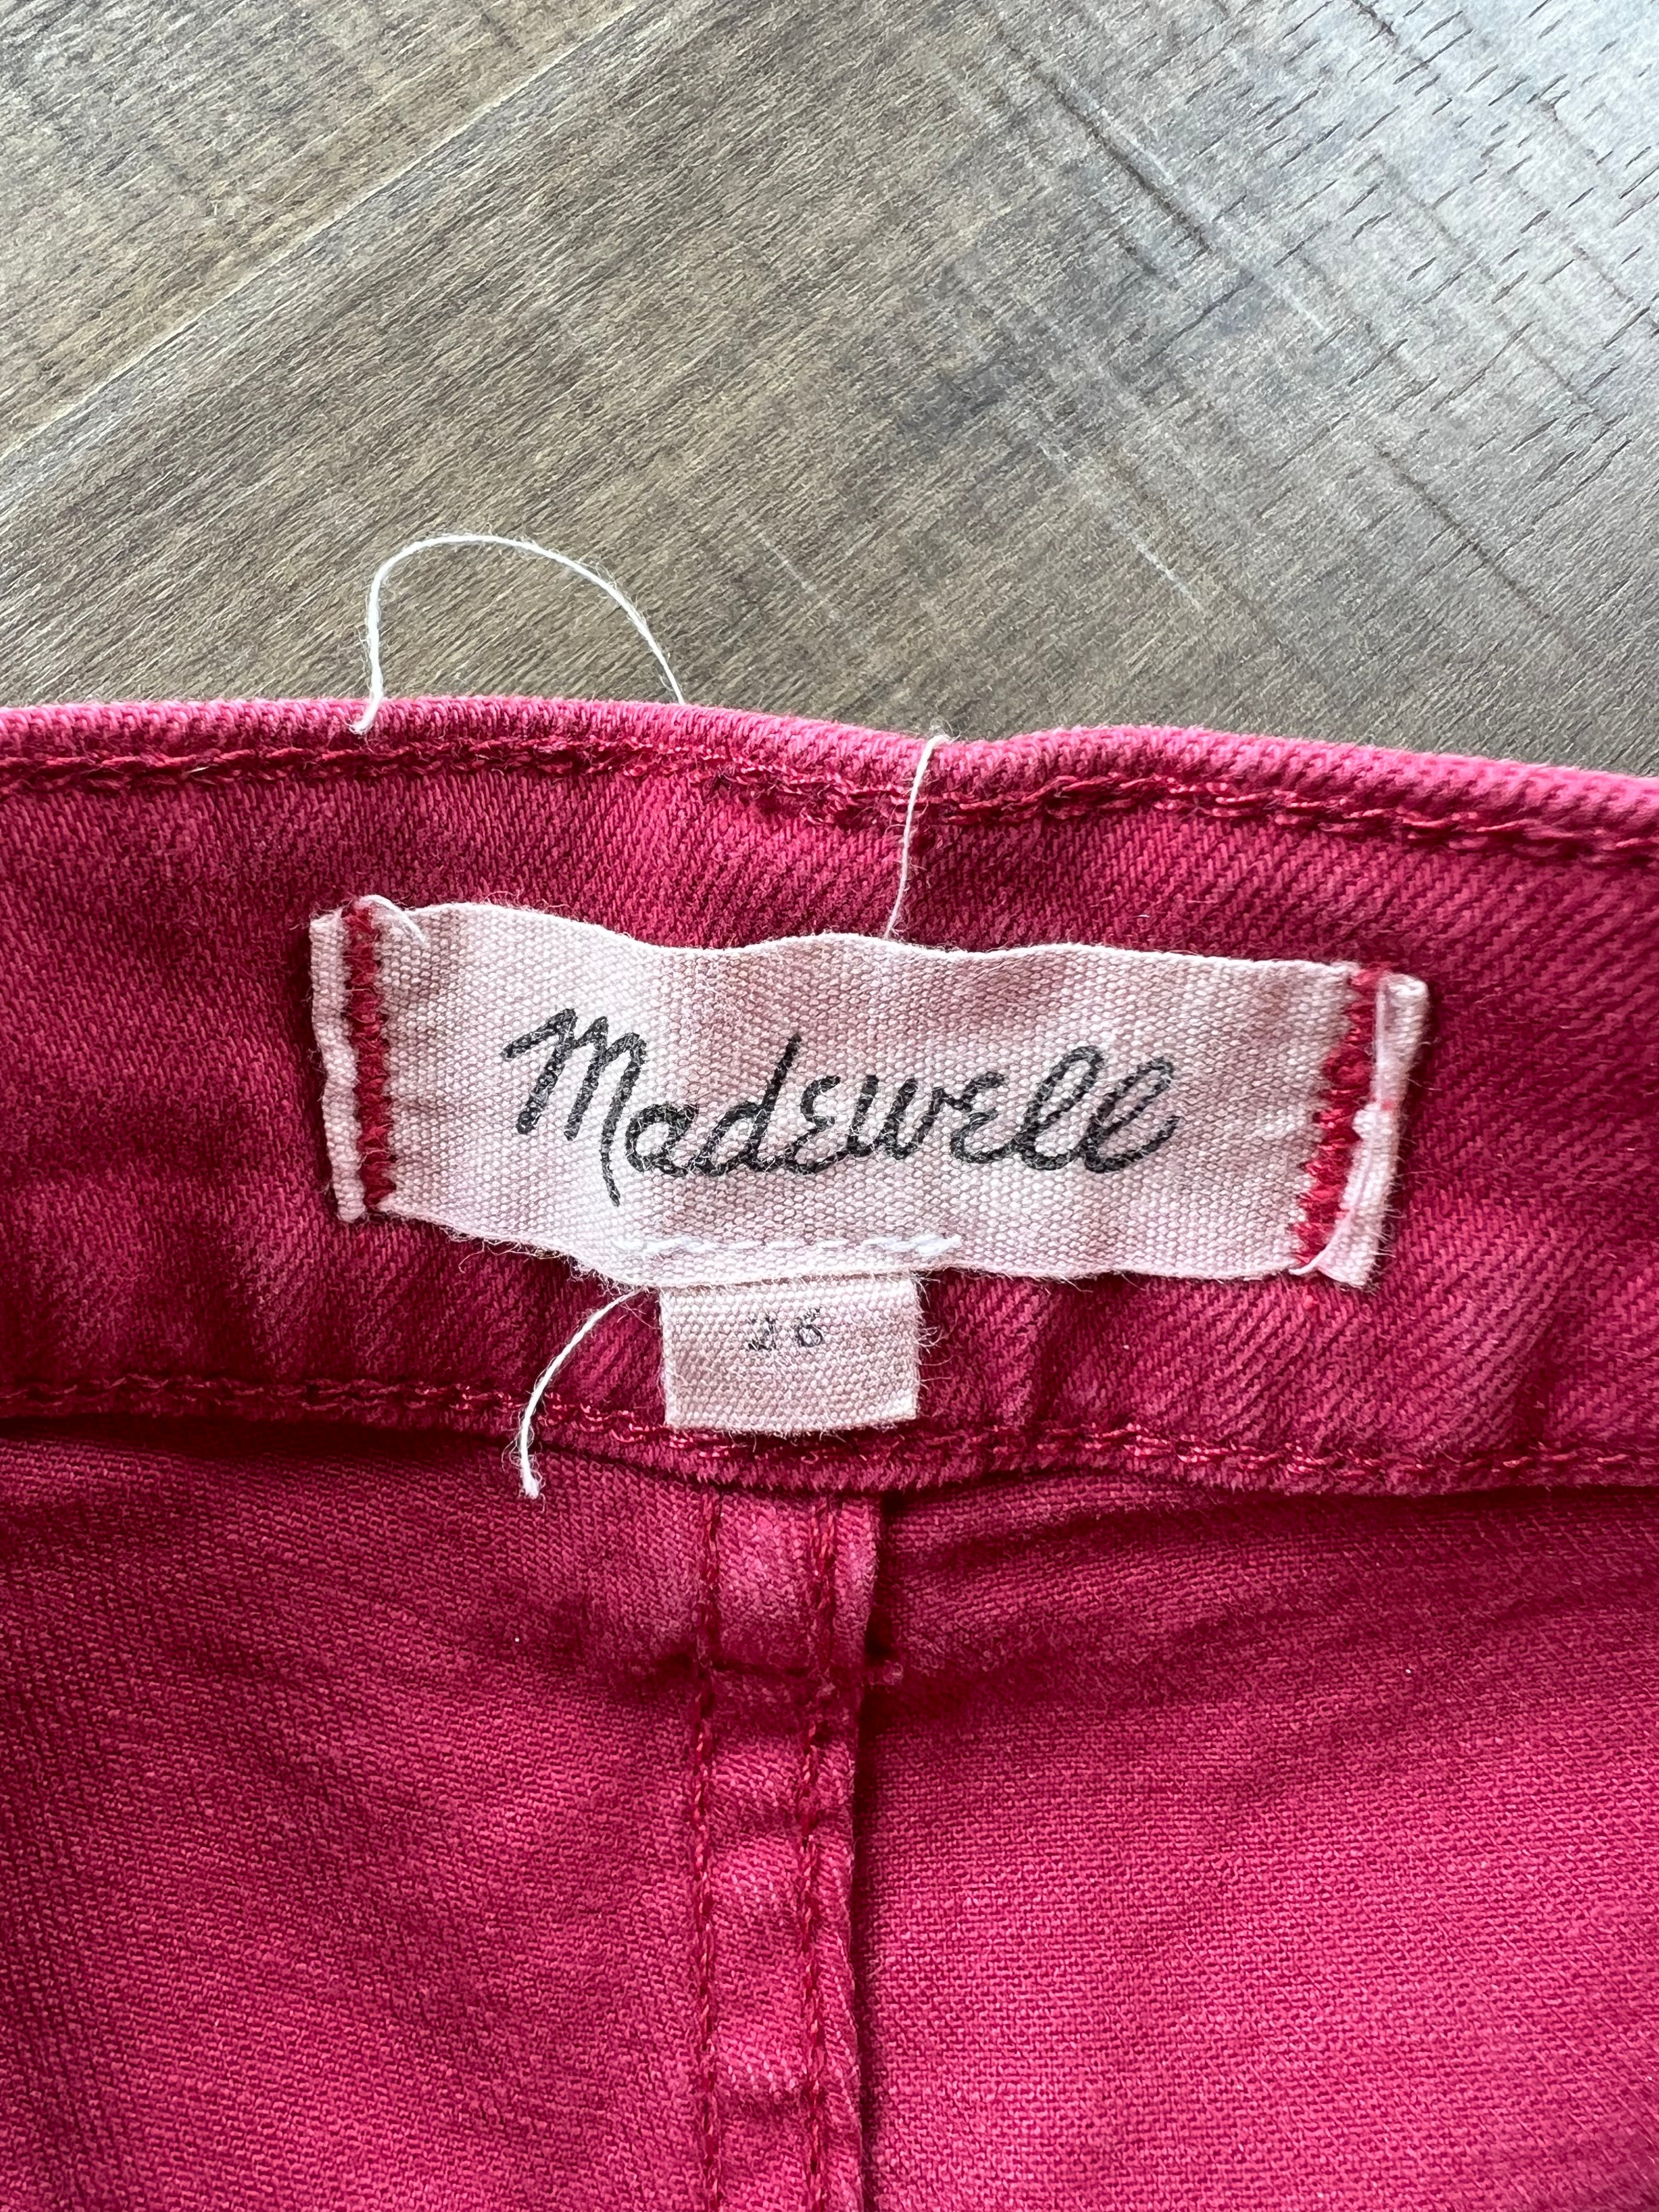 150: Madewell Shorts 26